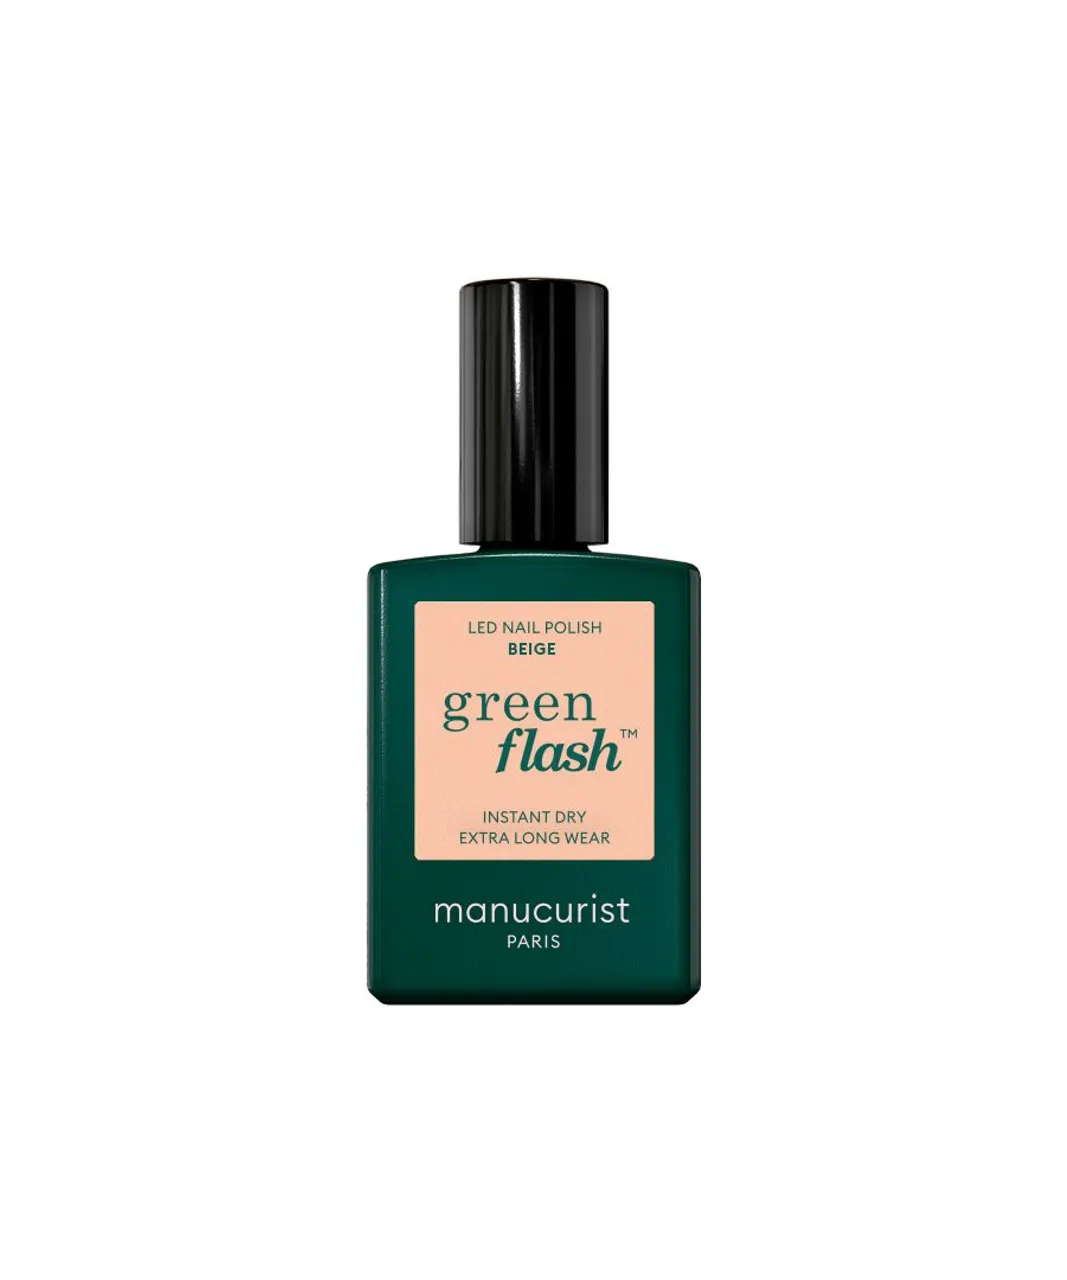 Manucurist Unisex -GREEN FLASH - BEIGE - Nail polish - One Size